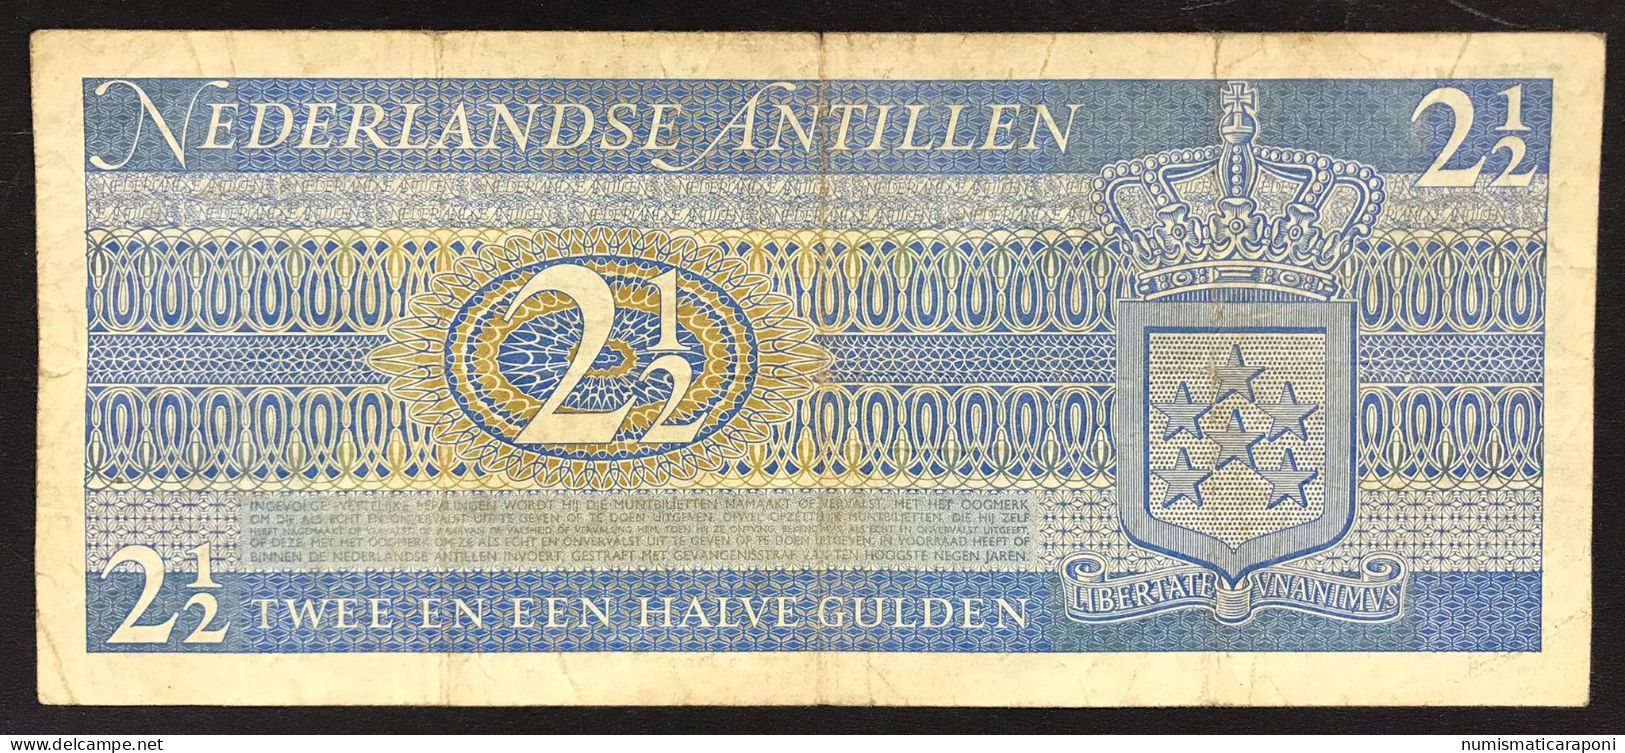 Nederlandse Antillen 2,5 Gulden Néerlandaises  Antillen 1970 2 1/2 Gulden Pick#21 Lotto 1946 - Antillas Neerlandesas (...-1986)